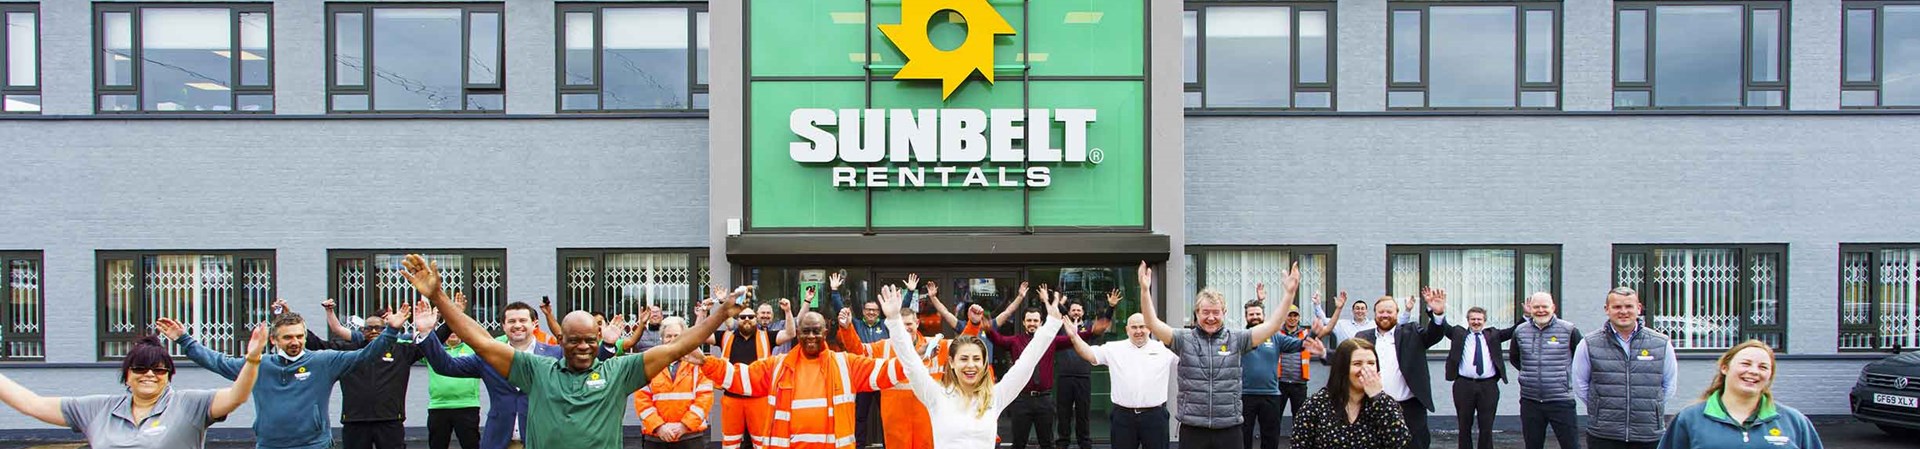 Sunbelt Rentals Heathrow Colleagues Celebrating